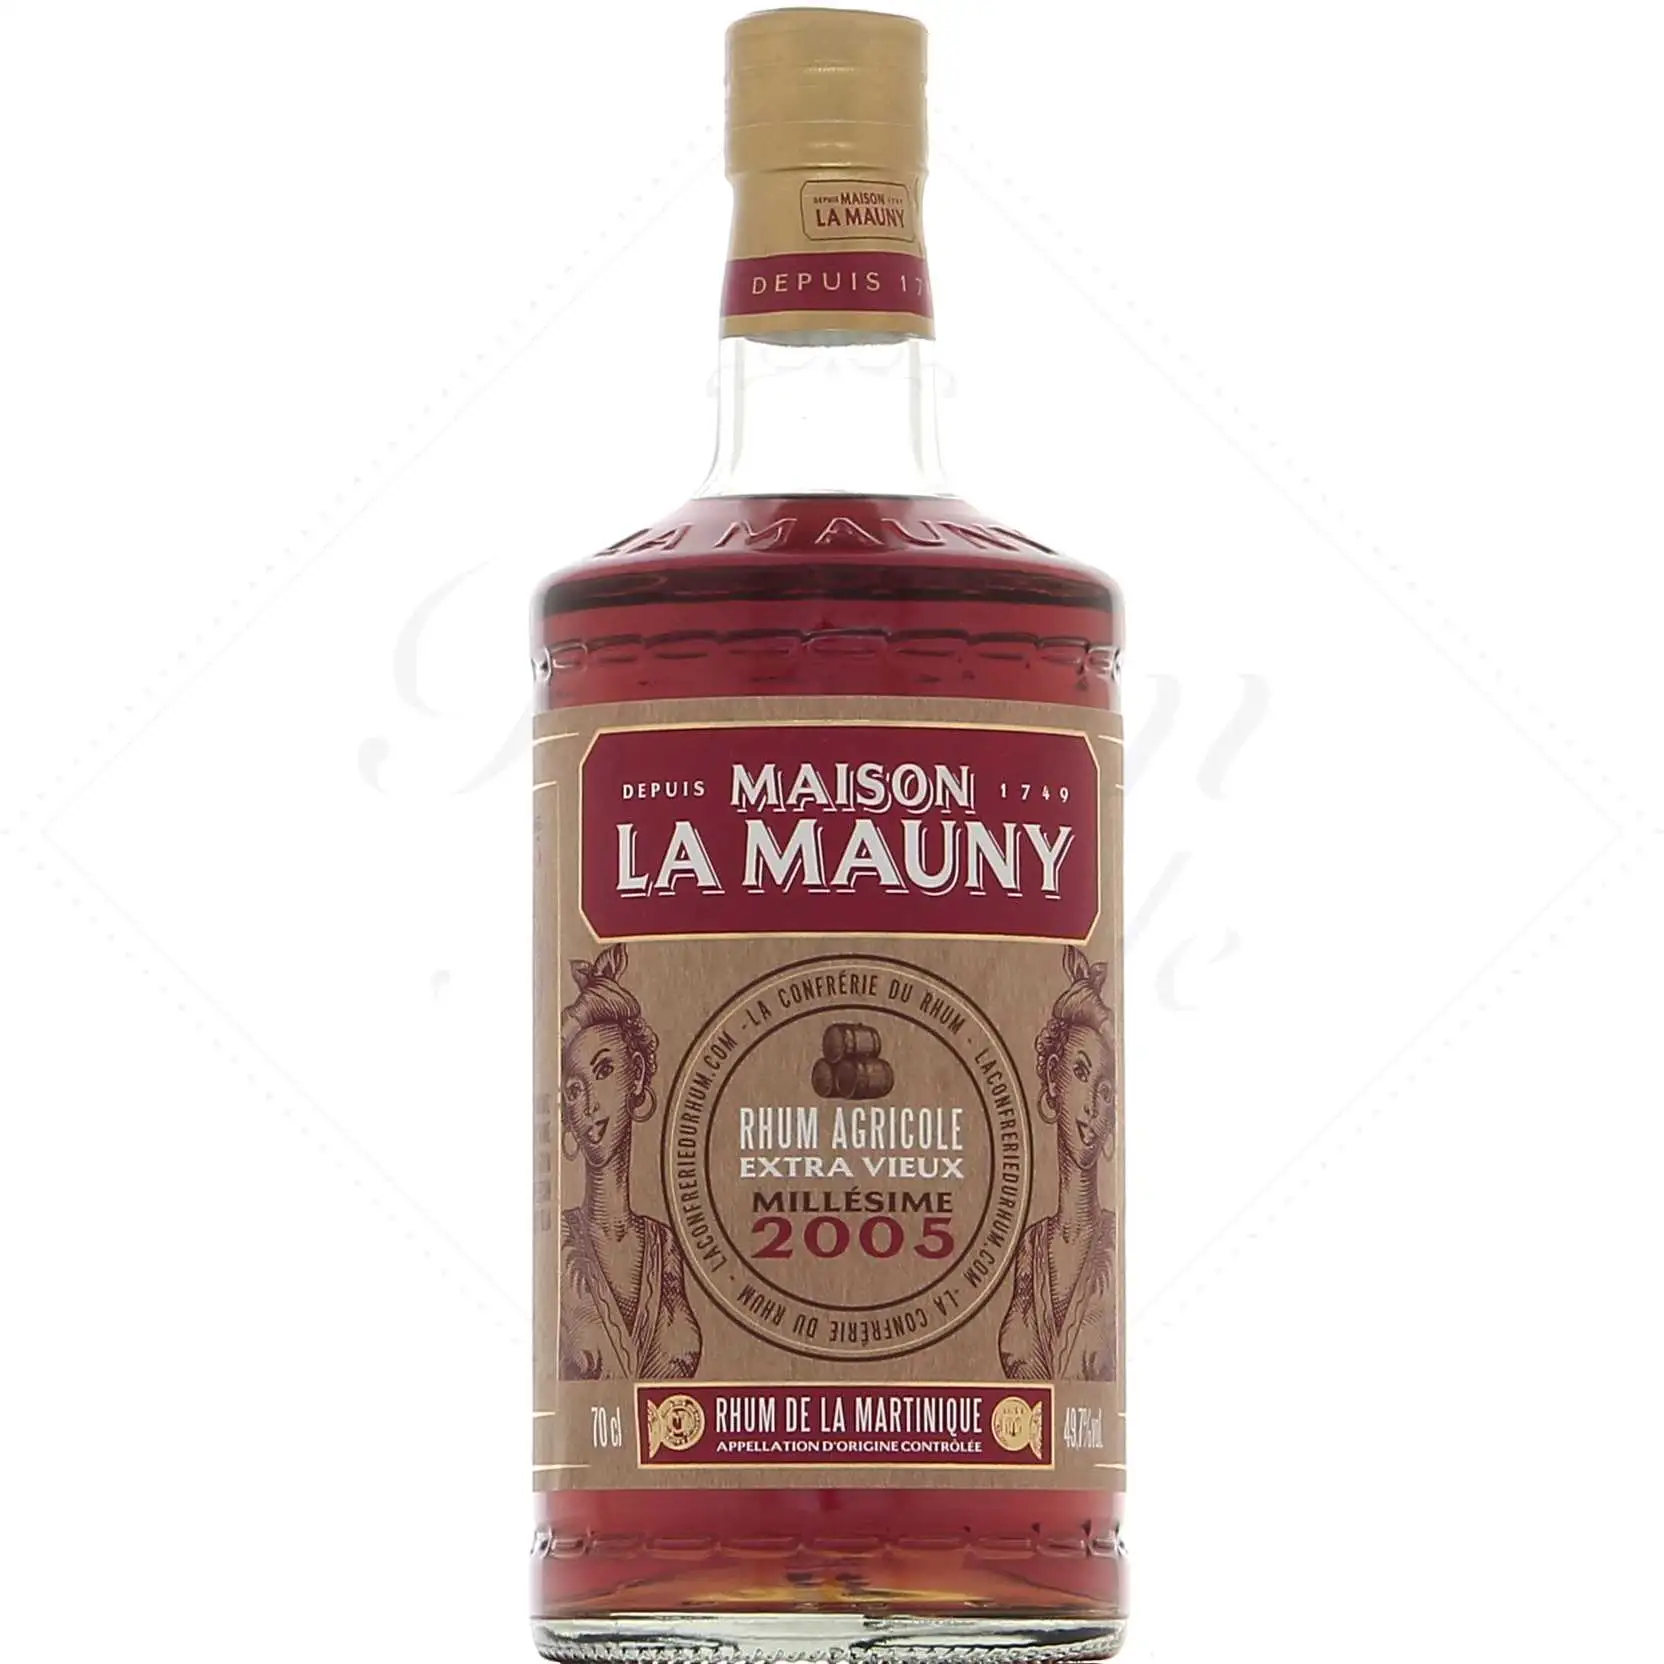 Image of the front of the bottle of the rum La Confrérie du Rhum